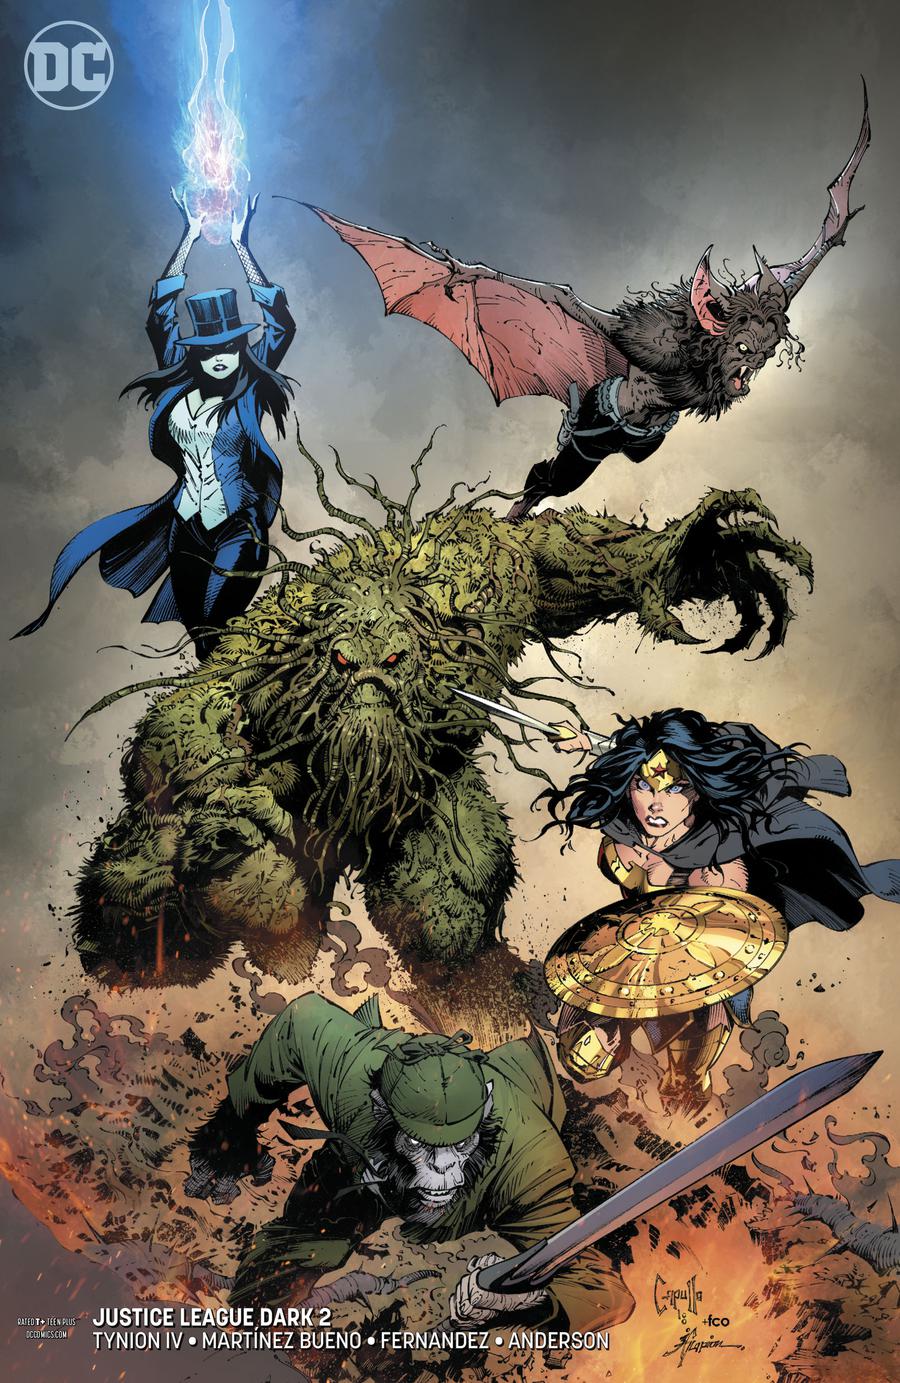 Justice League Dark Vol 2 #2 Cover B Variant Greg Capullo & Jonathan Glapion Cover